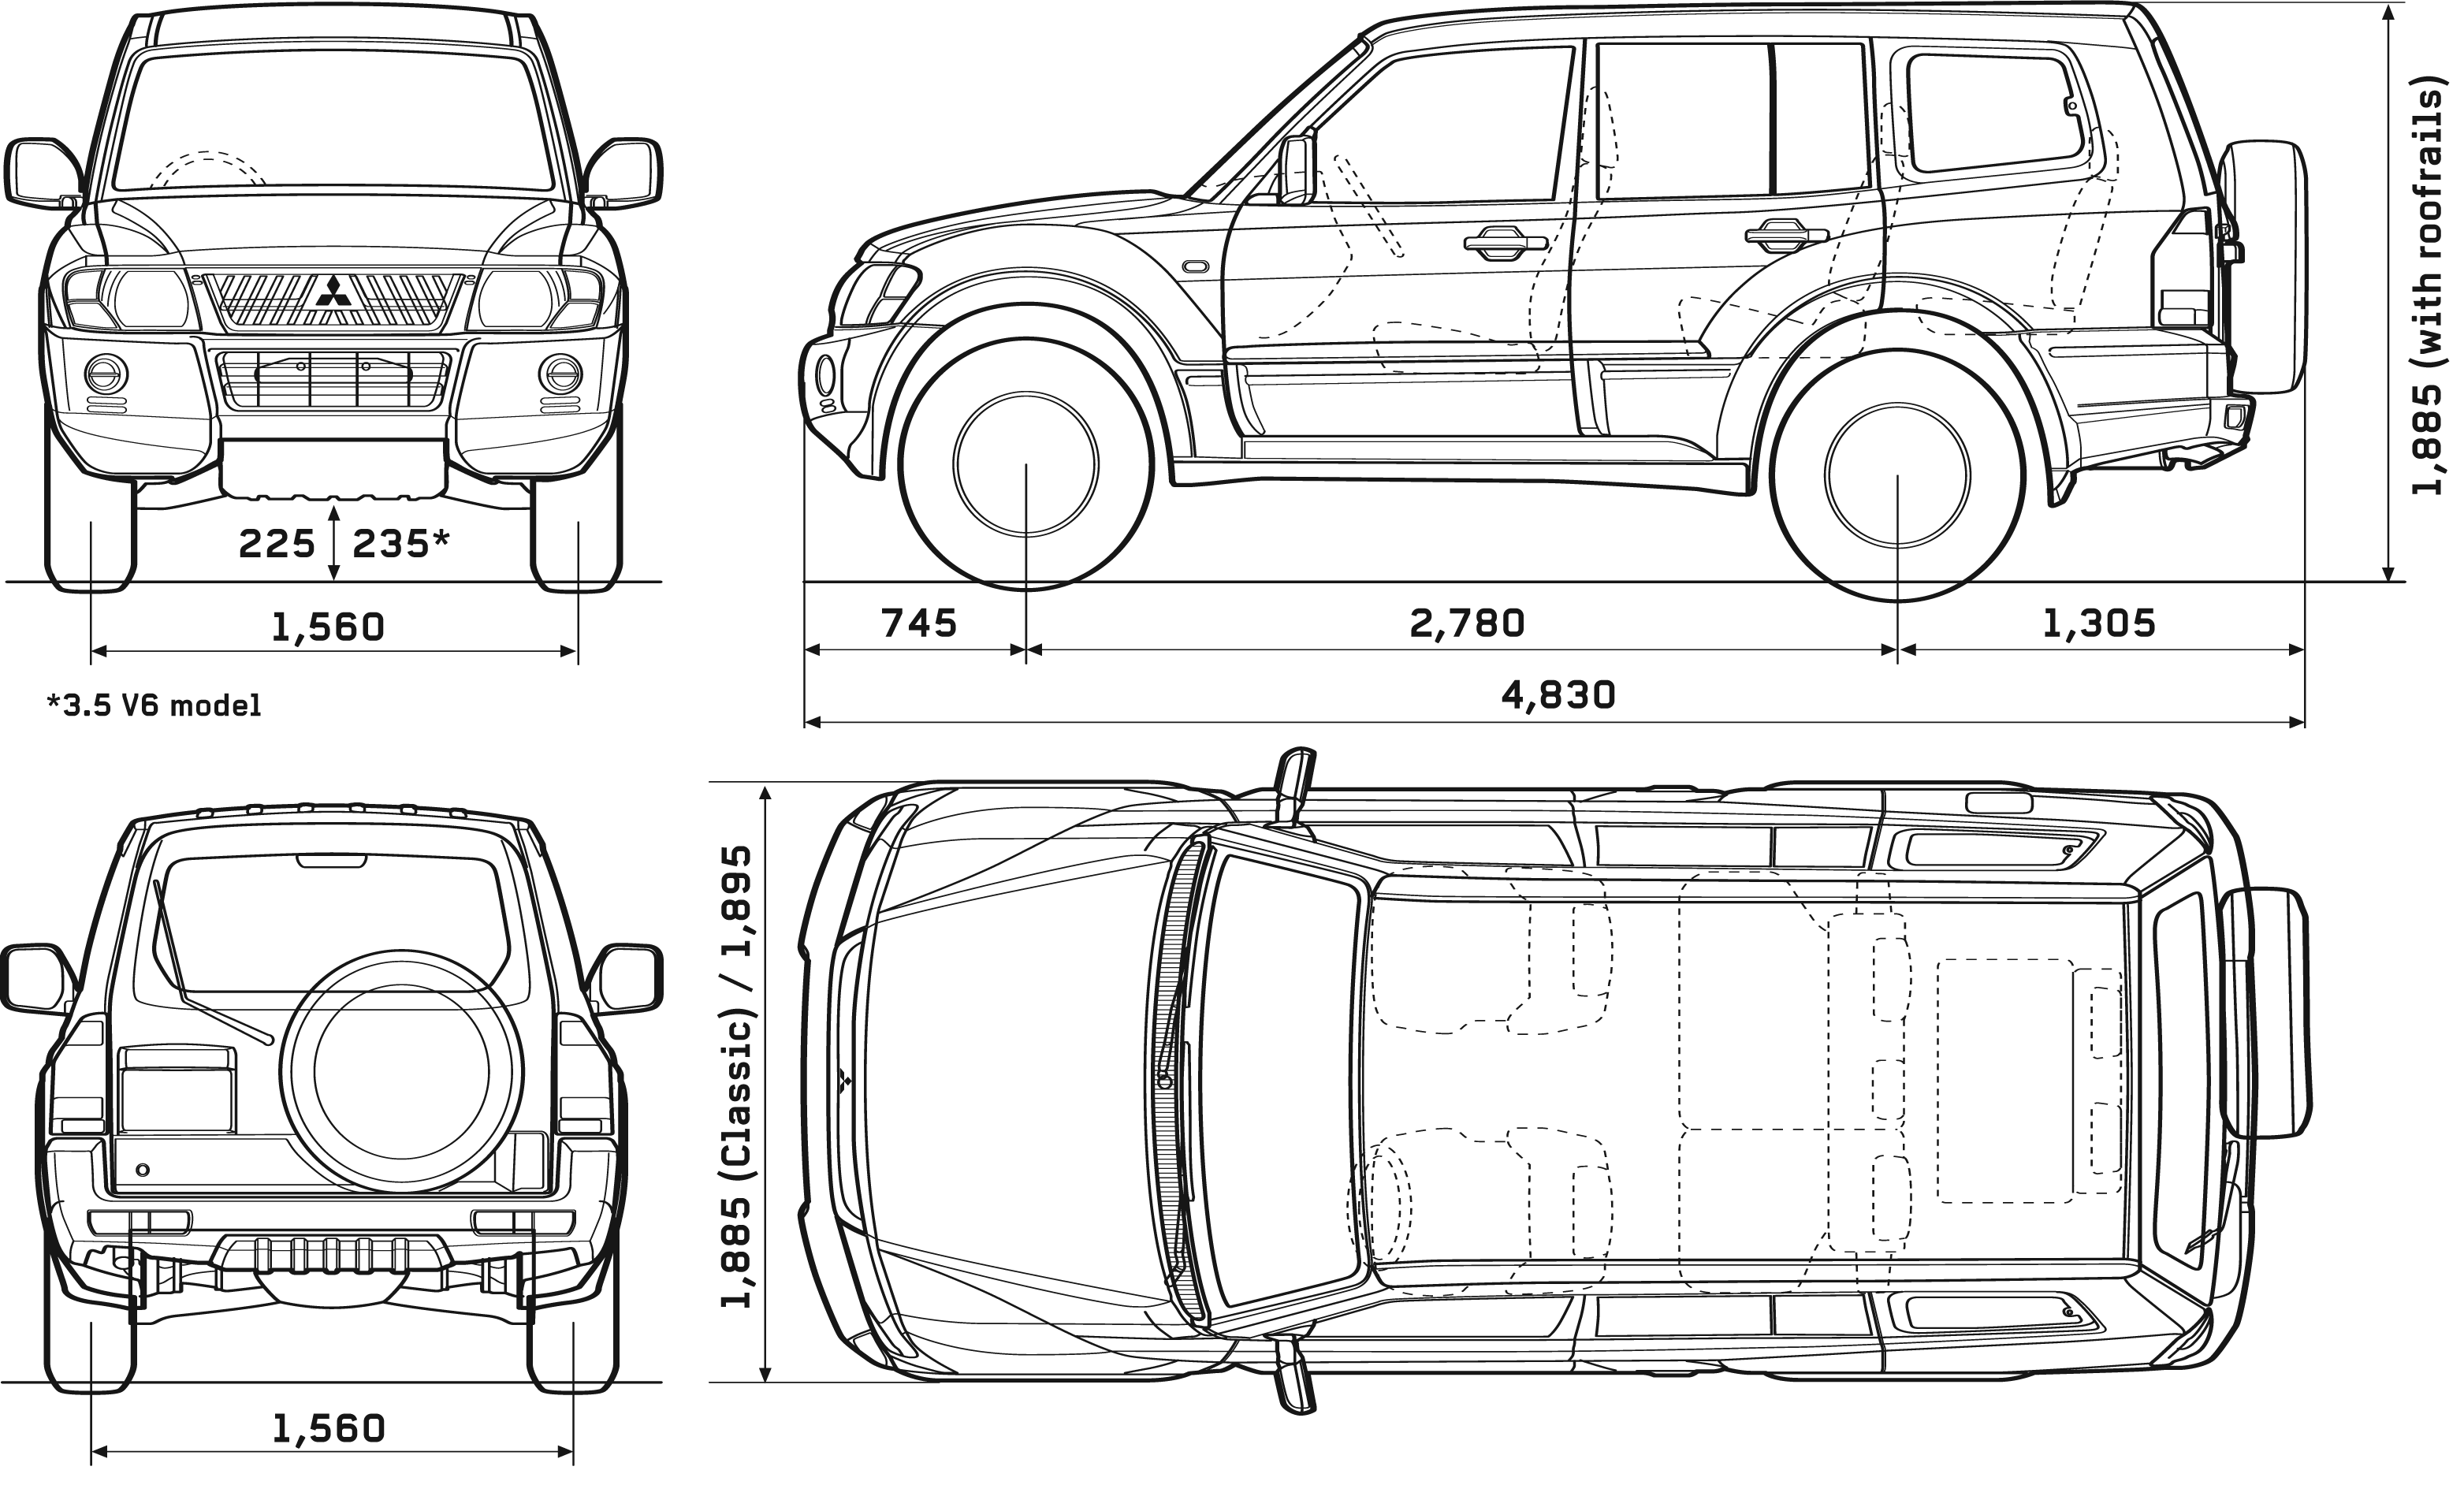 2007 Mitsubishi Shogun/Pajero IV 5-door LWB SUV blueprints free - Outlines